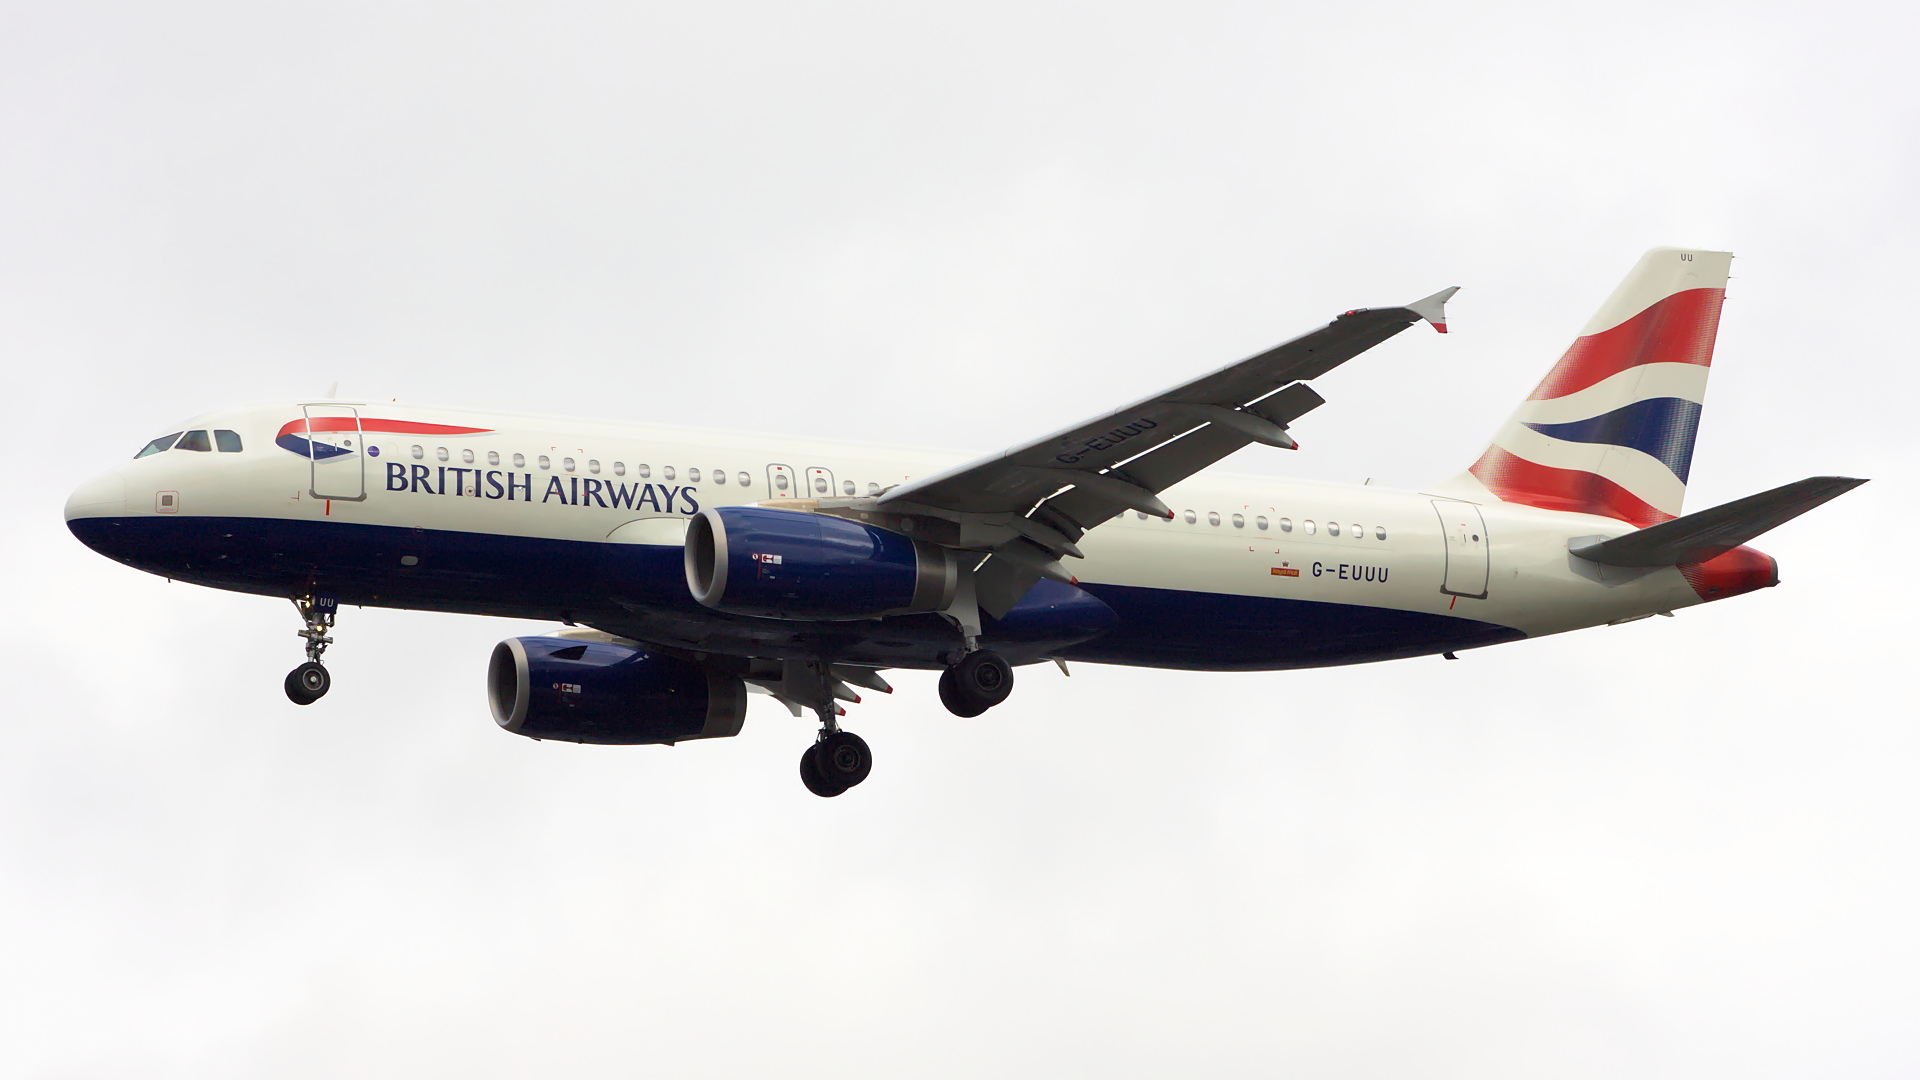 G-EUUU ✈ British Airways Airbus A320-232 @ London-Heathrow